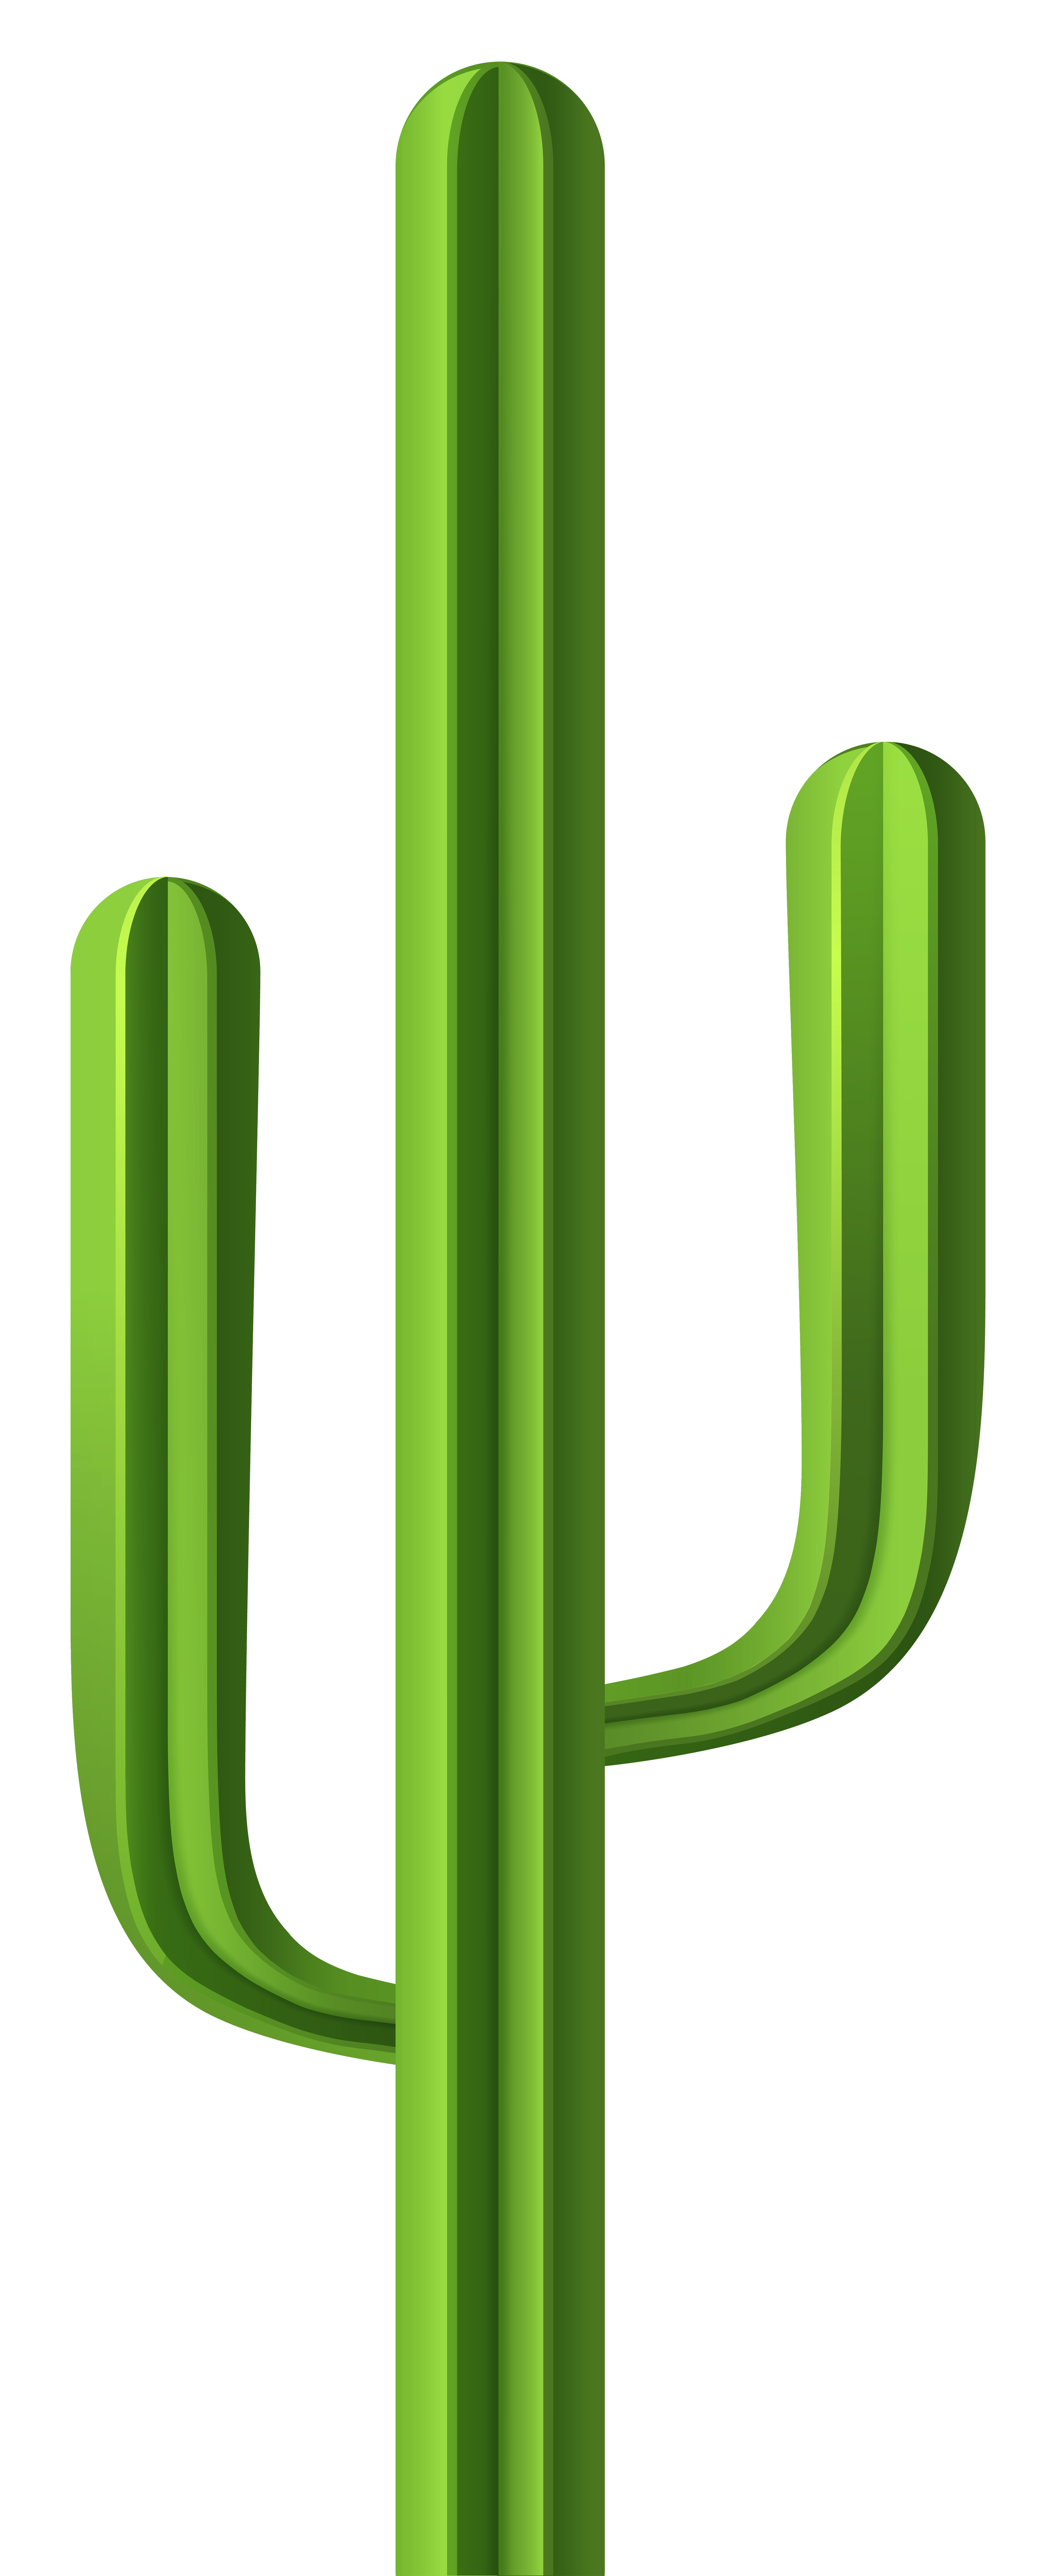 Cactus PNG Clip Art Image